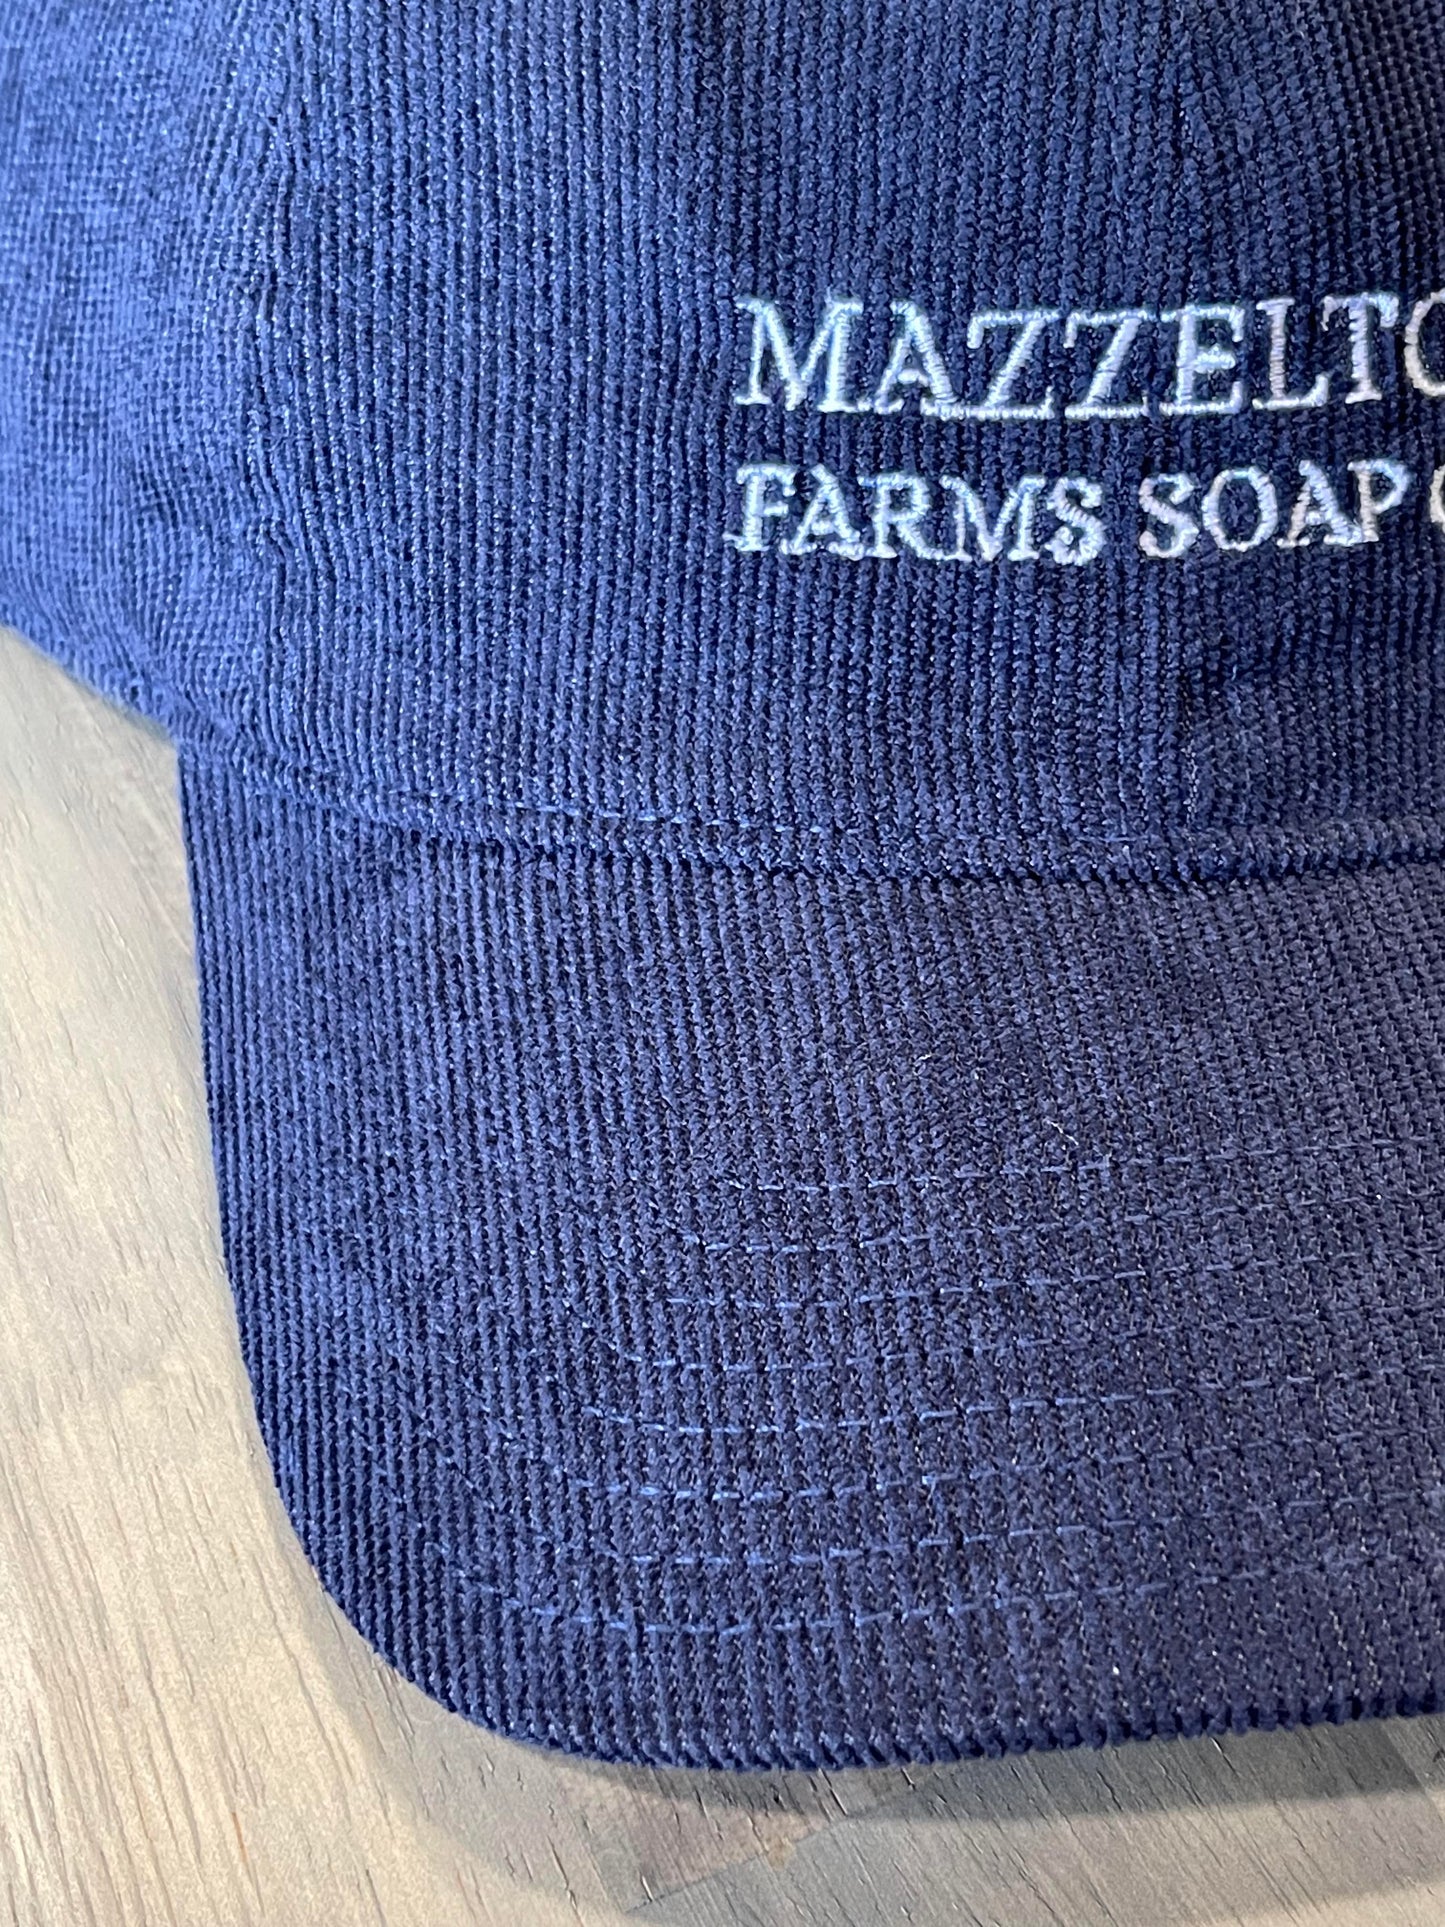 Mazzeltov Farms Corduroy Dad Cap